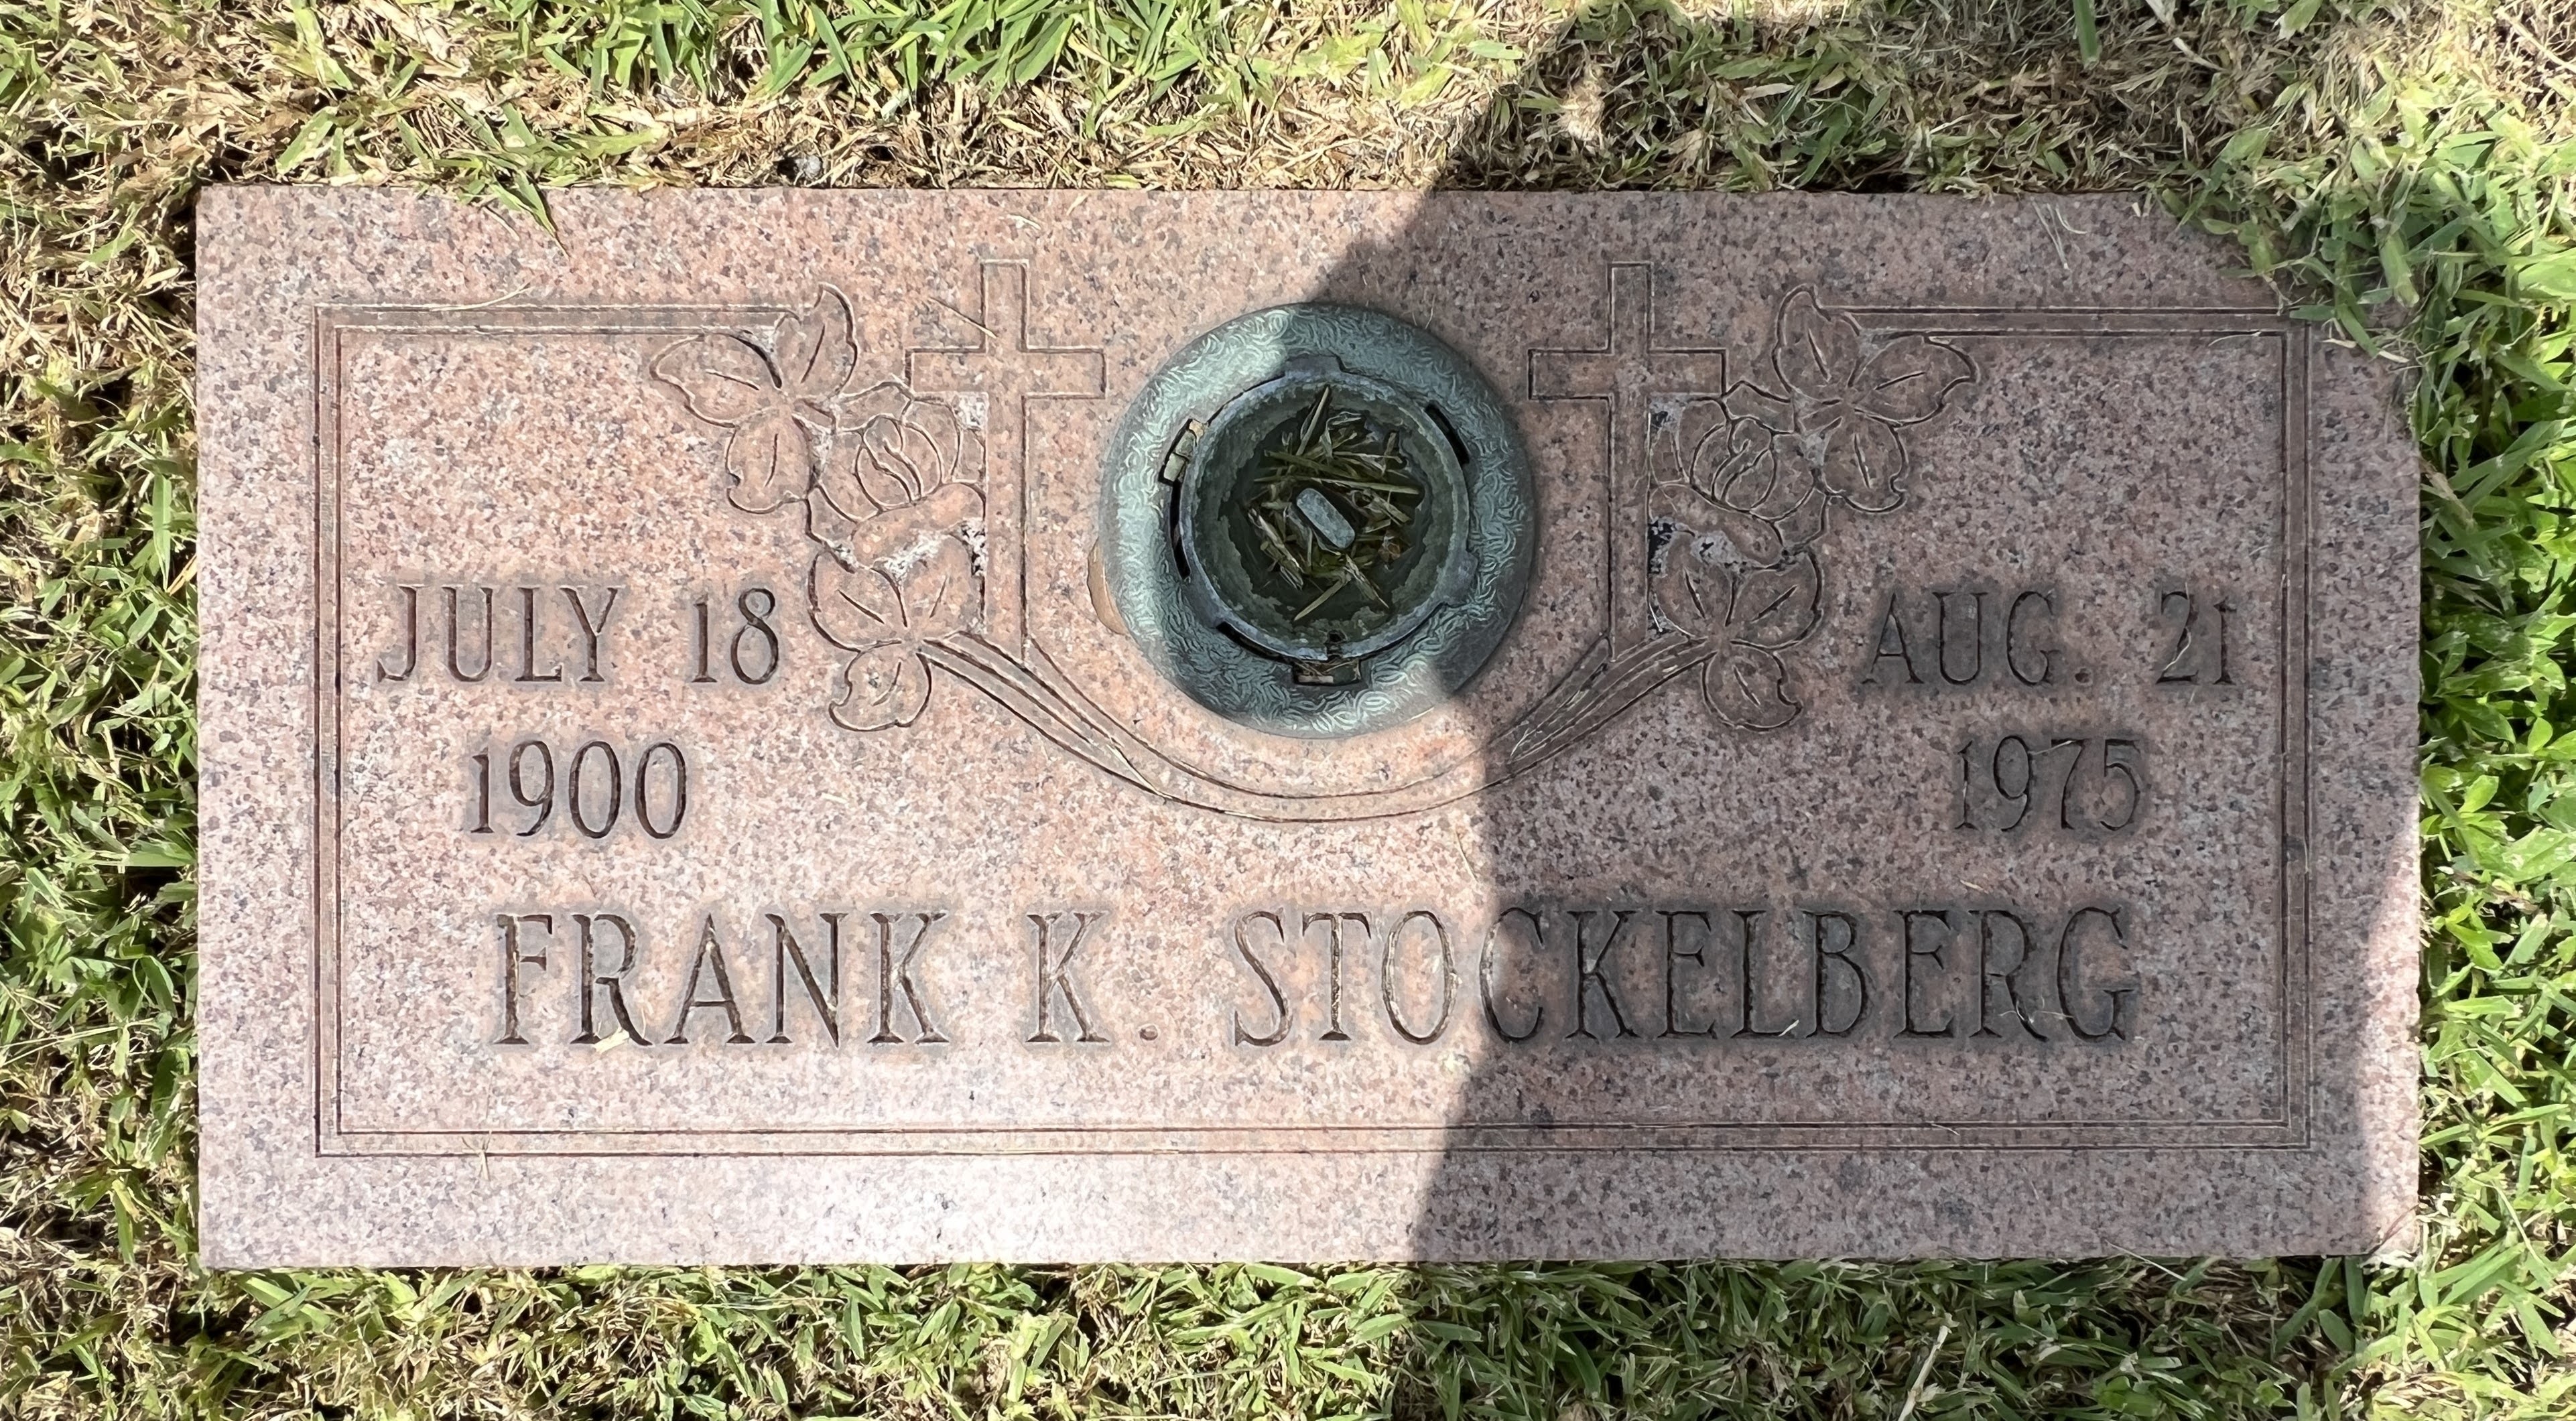 Frank K Stockelberg